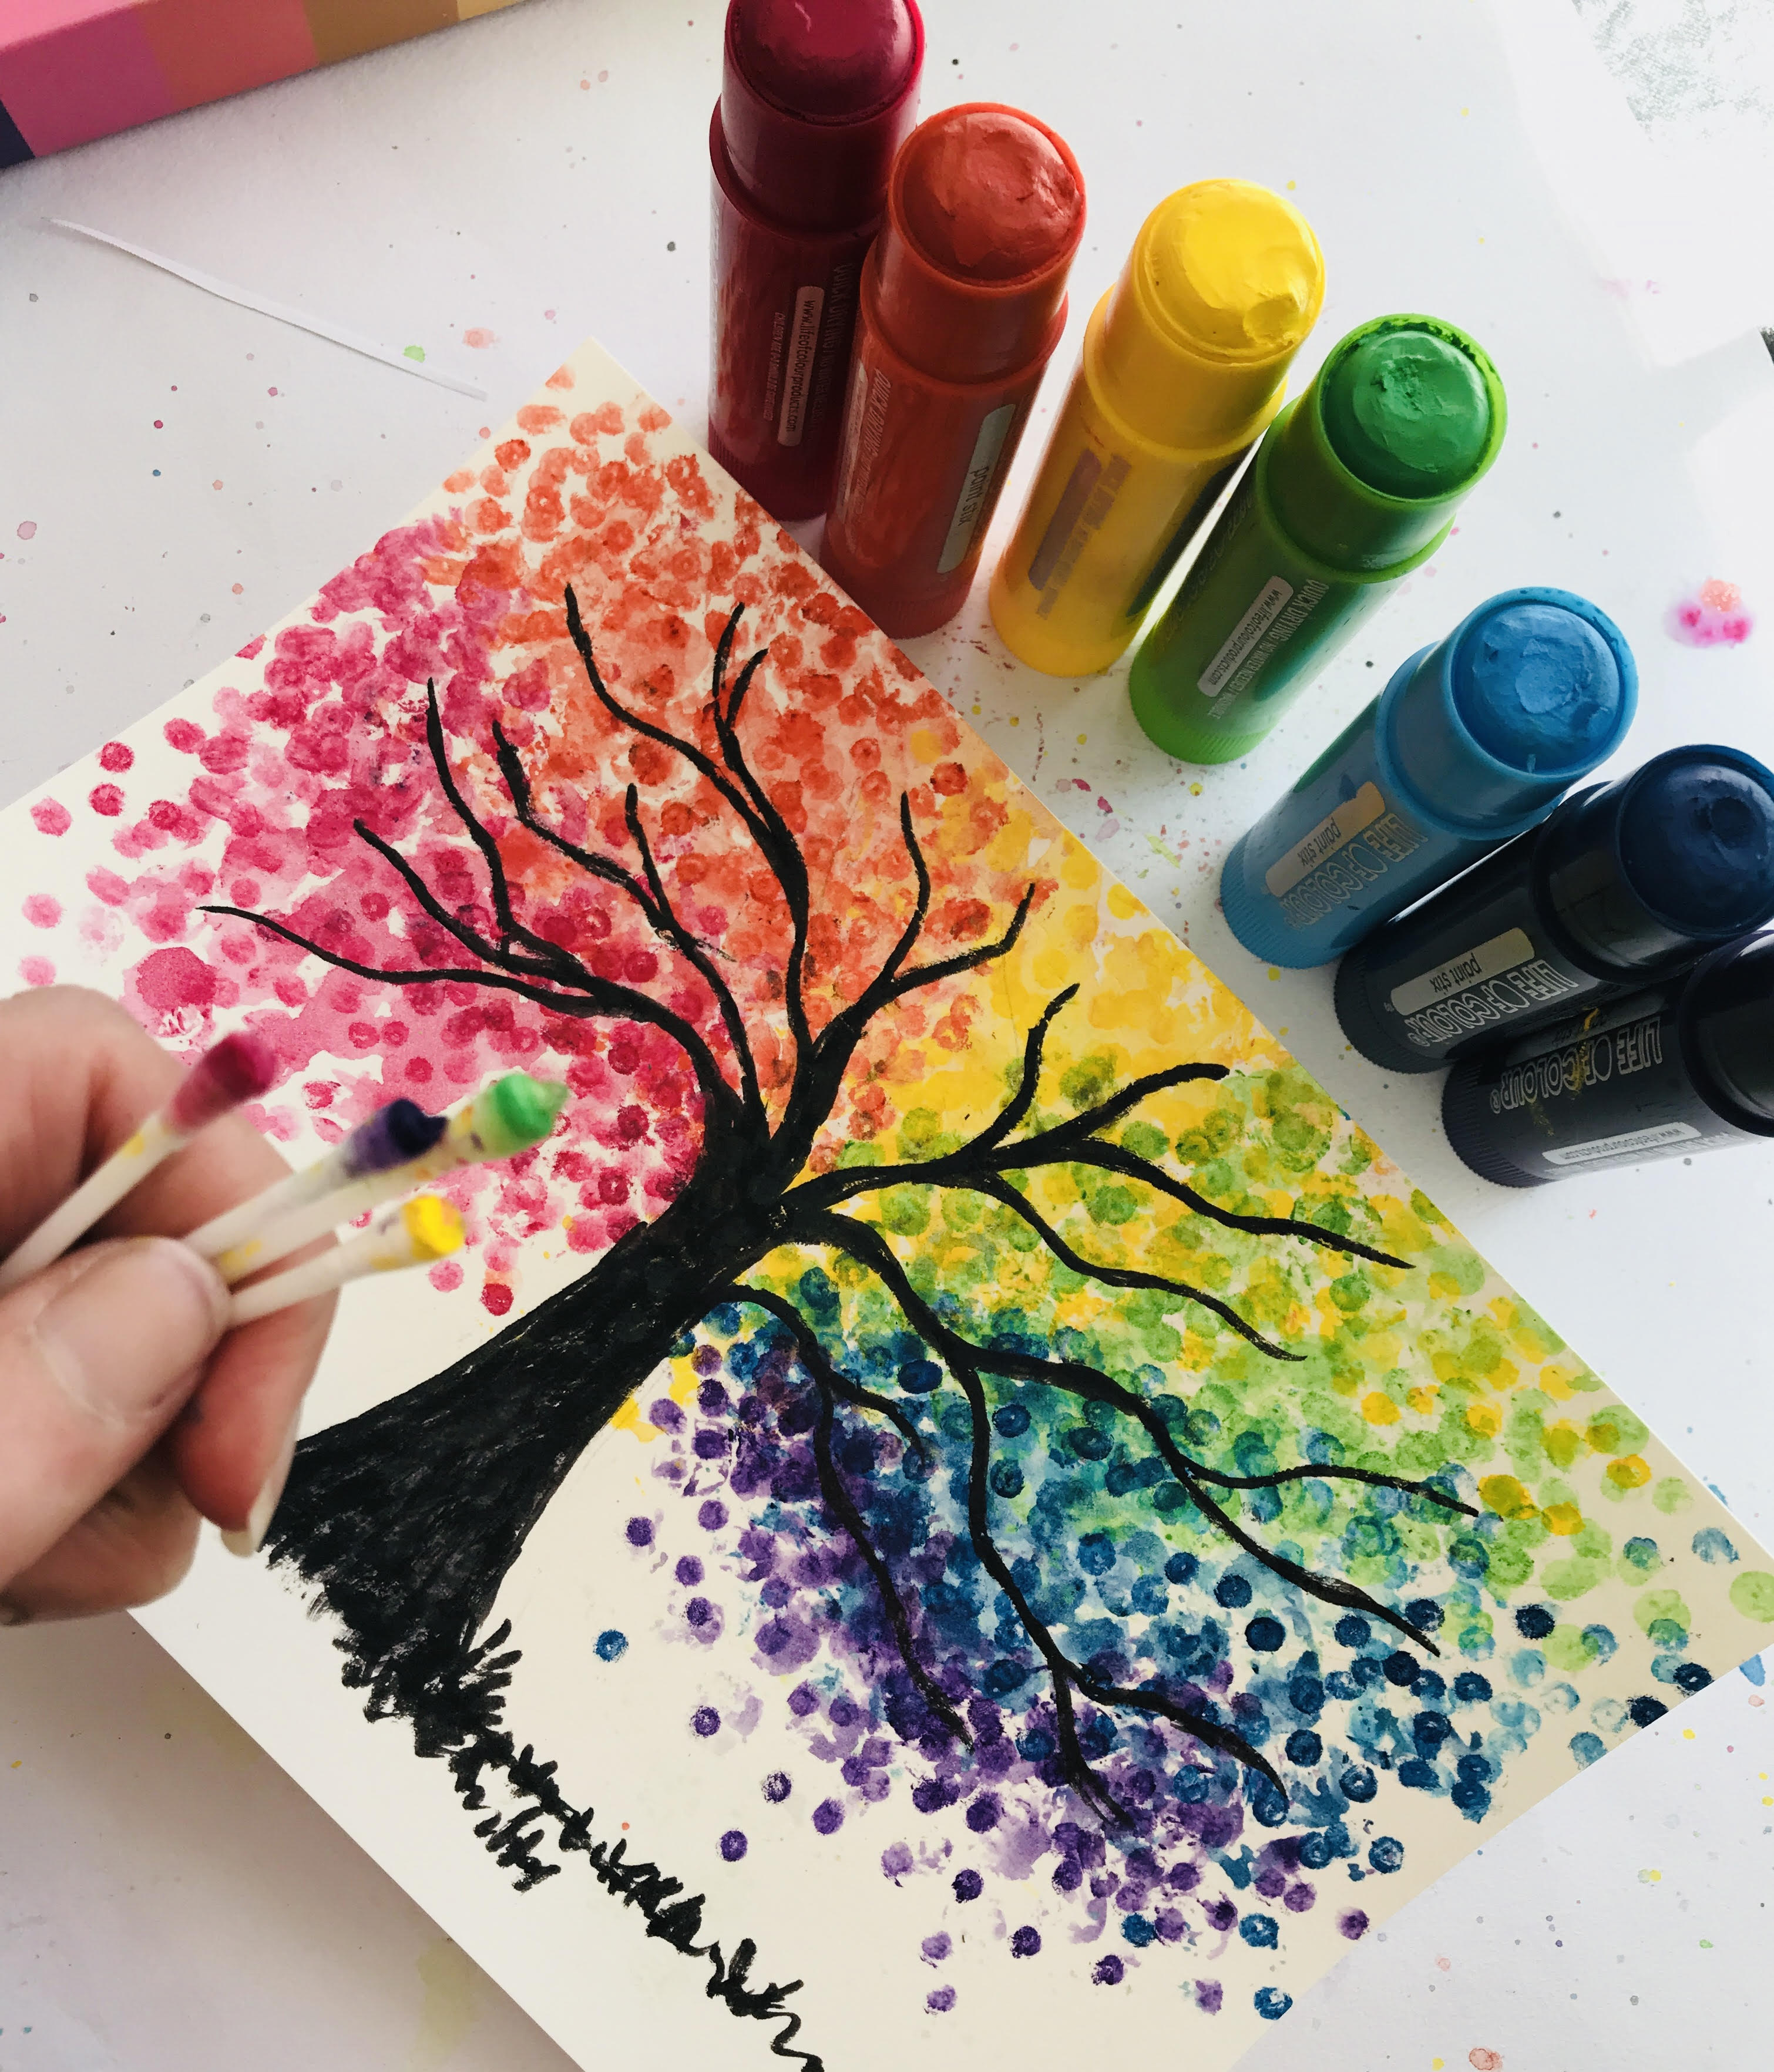 Creative Kids Gouache and Watercolour Kit activity sheet - Life of Colour